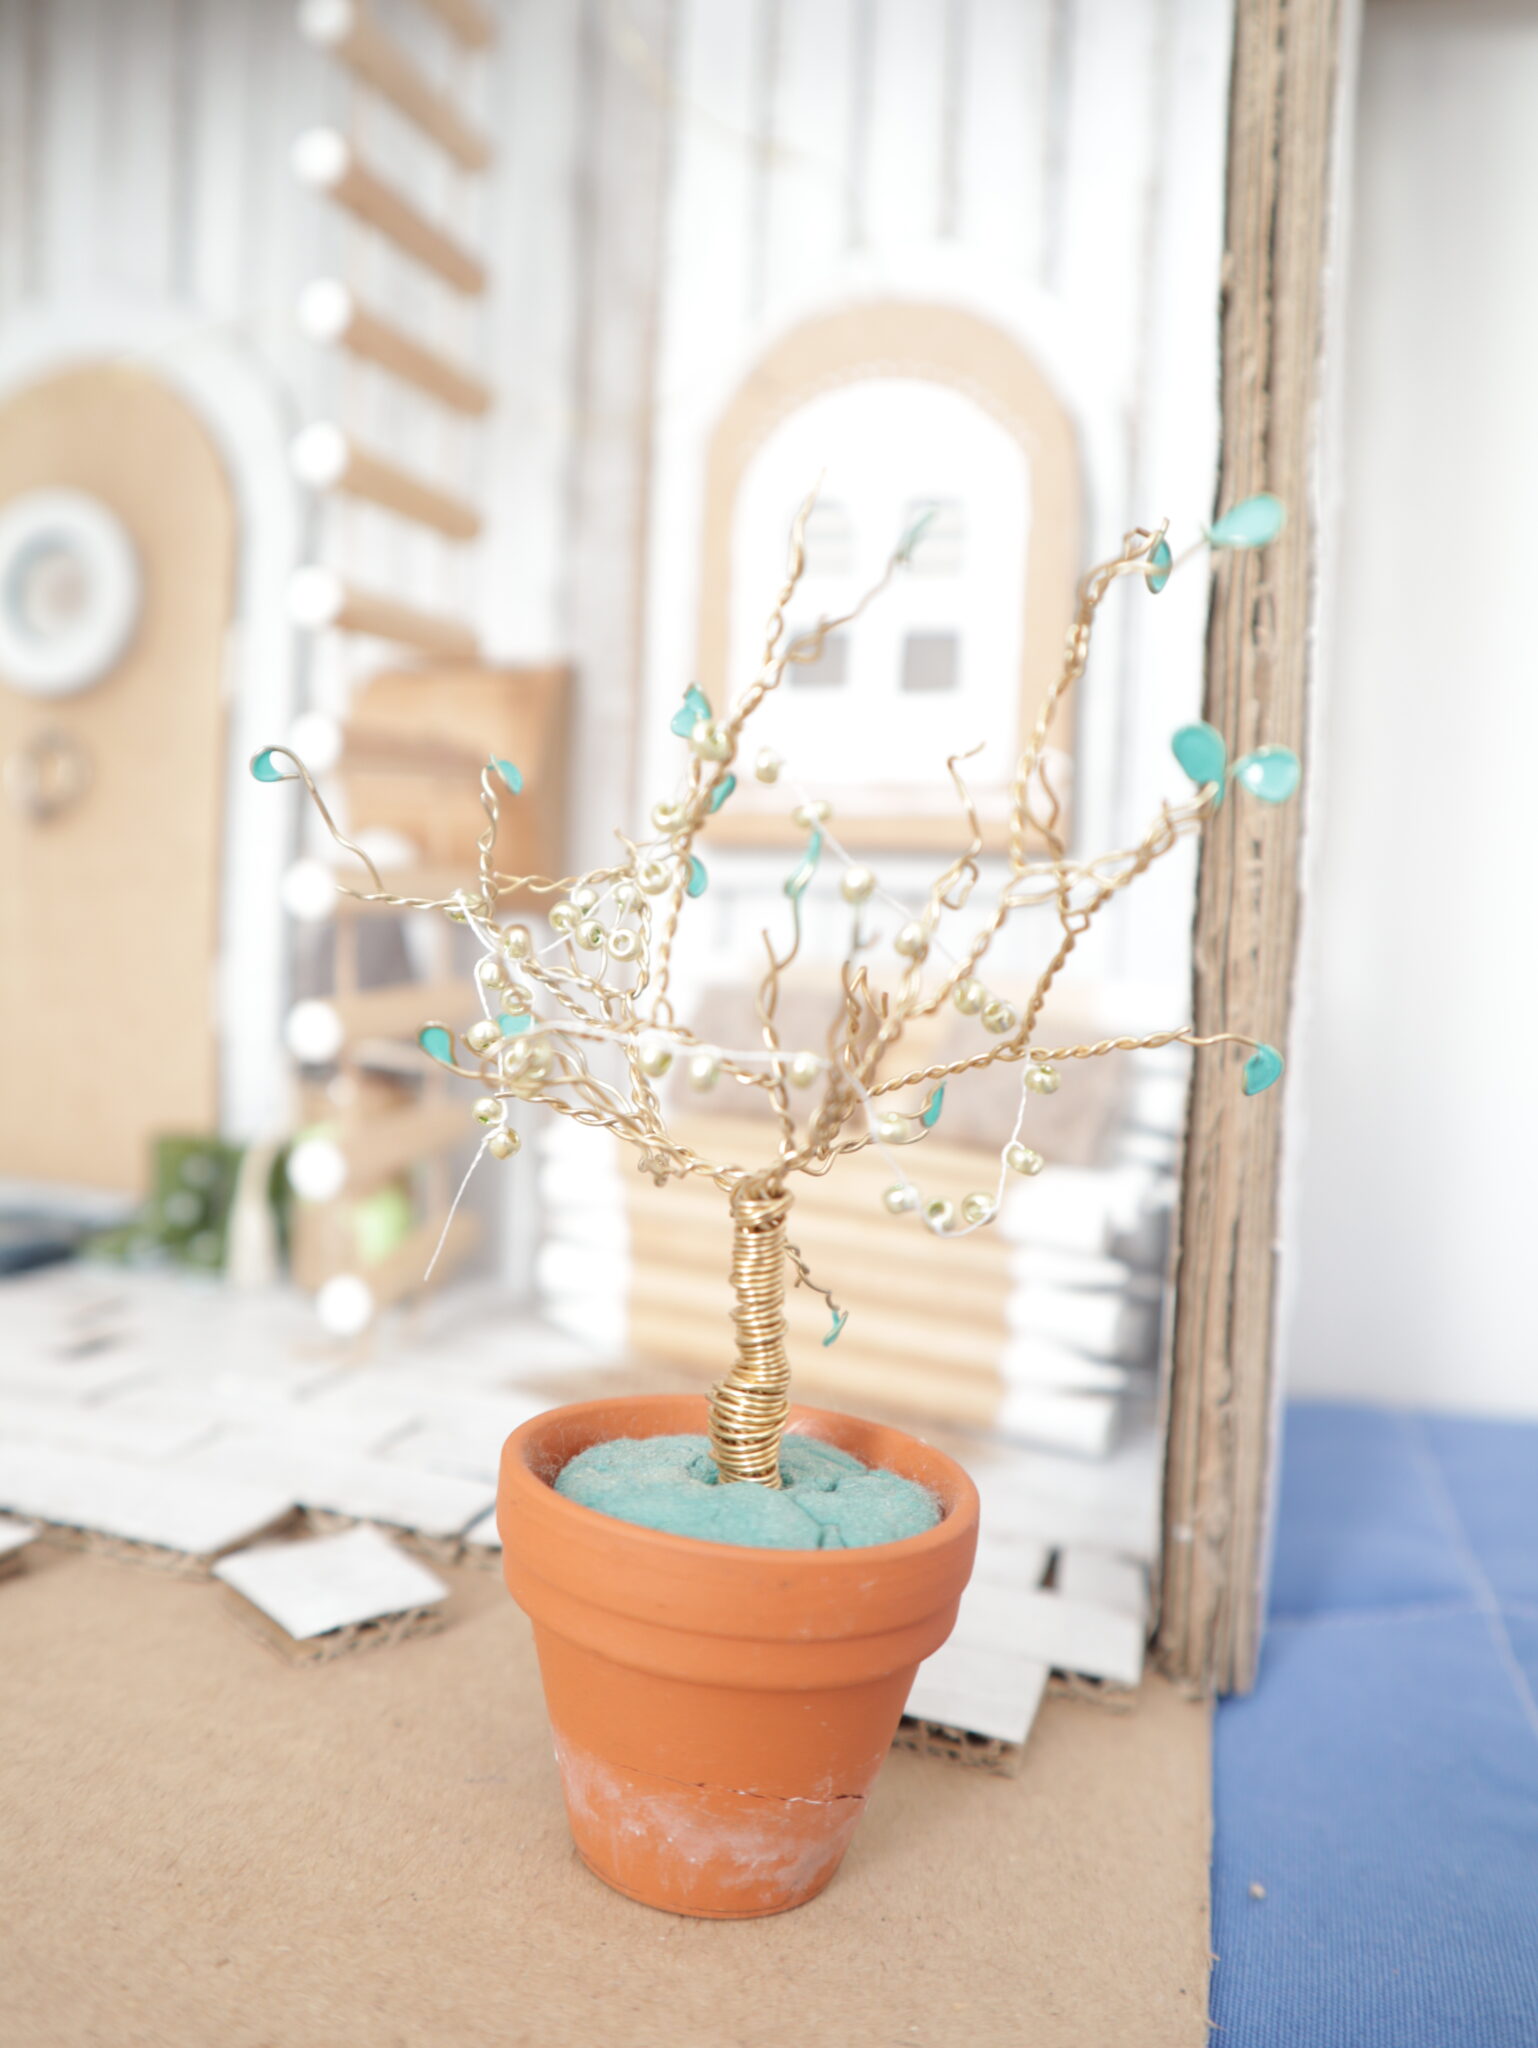 Dekoratives Gartenelement: Drahtbaum mit türkisen Blüten im Mini-Terrakotta-Blumentopf.